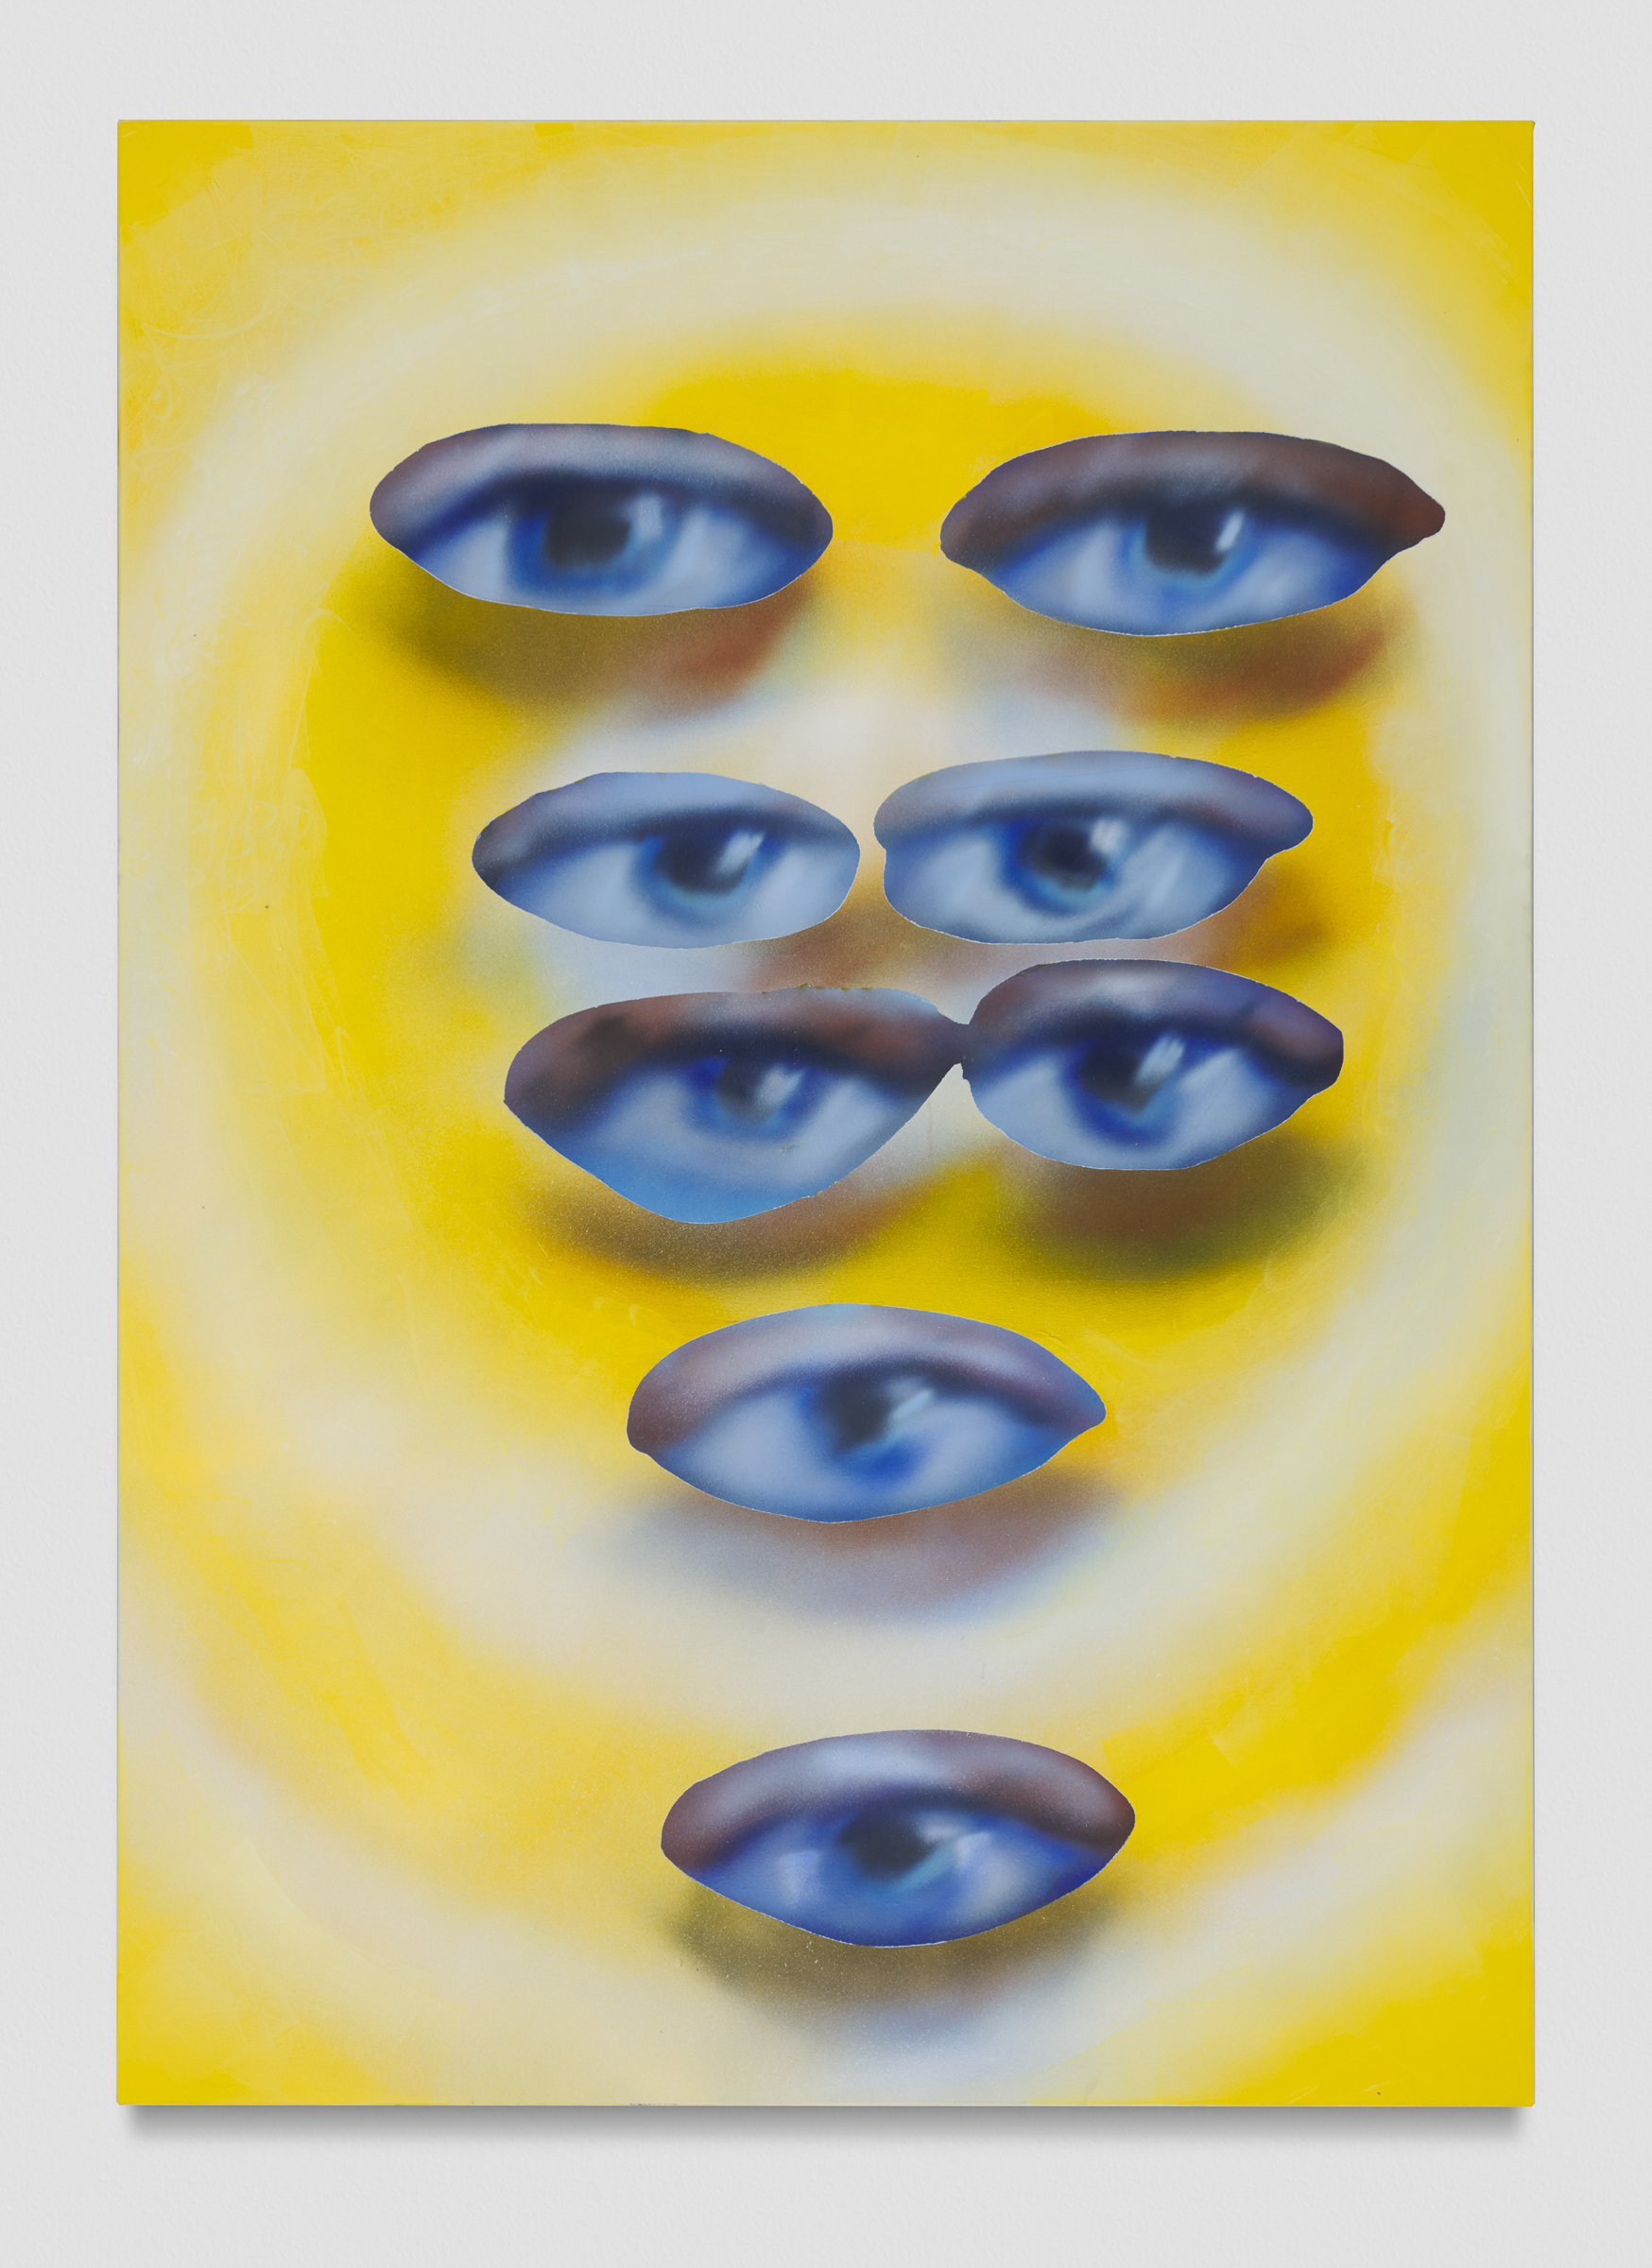   Austin Lee   Human Eyes,  2019 Acrylic on canvas 84 x 60 inches Photo by Elon Schoenholz 